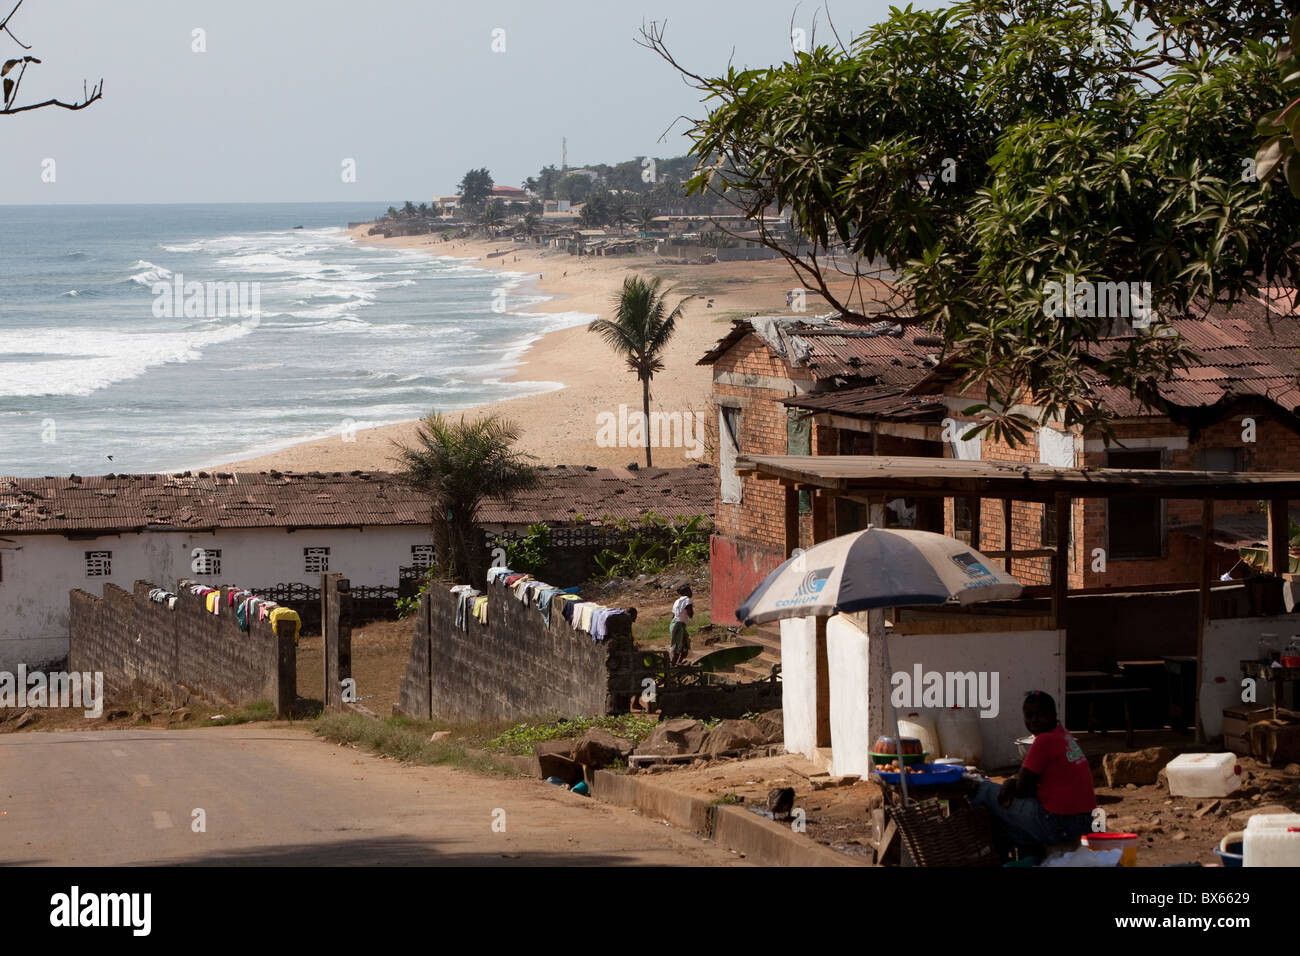 City scene along oceanfront | Monrovia, Liberia, West Africa. Stock Photo